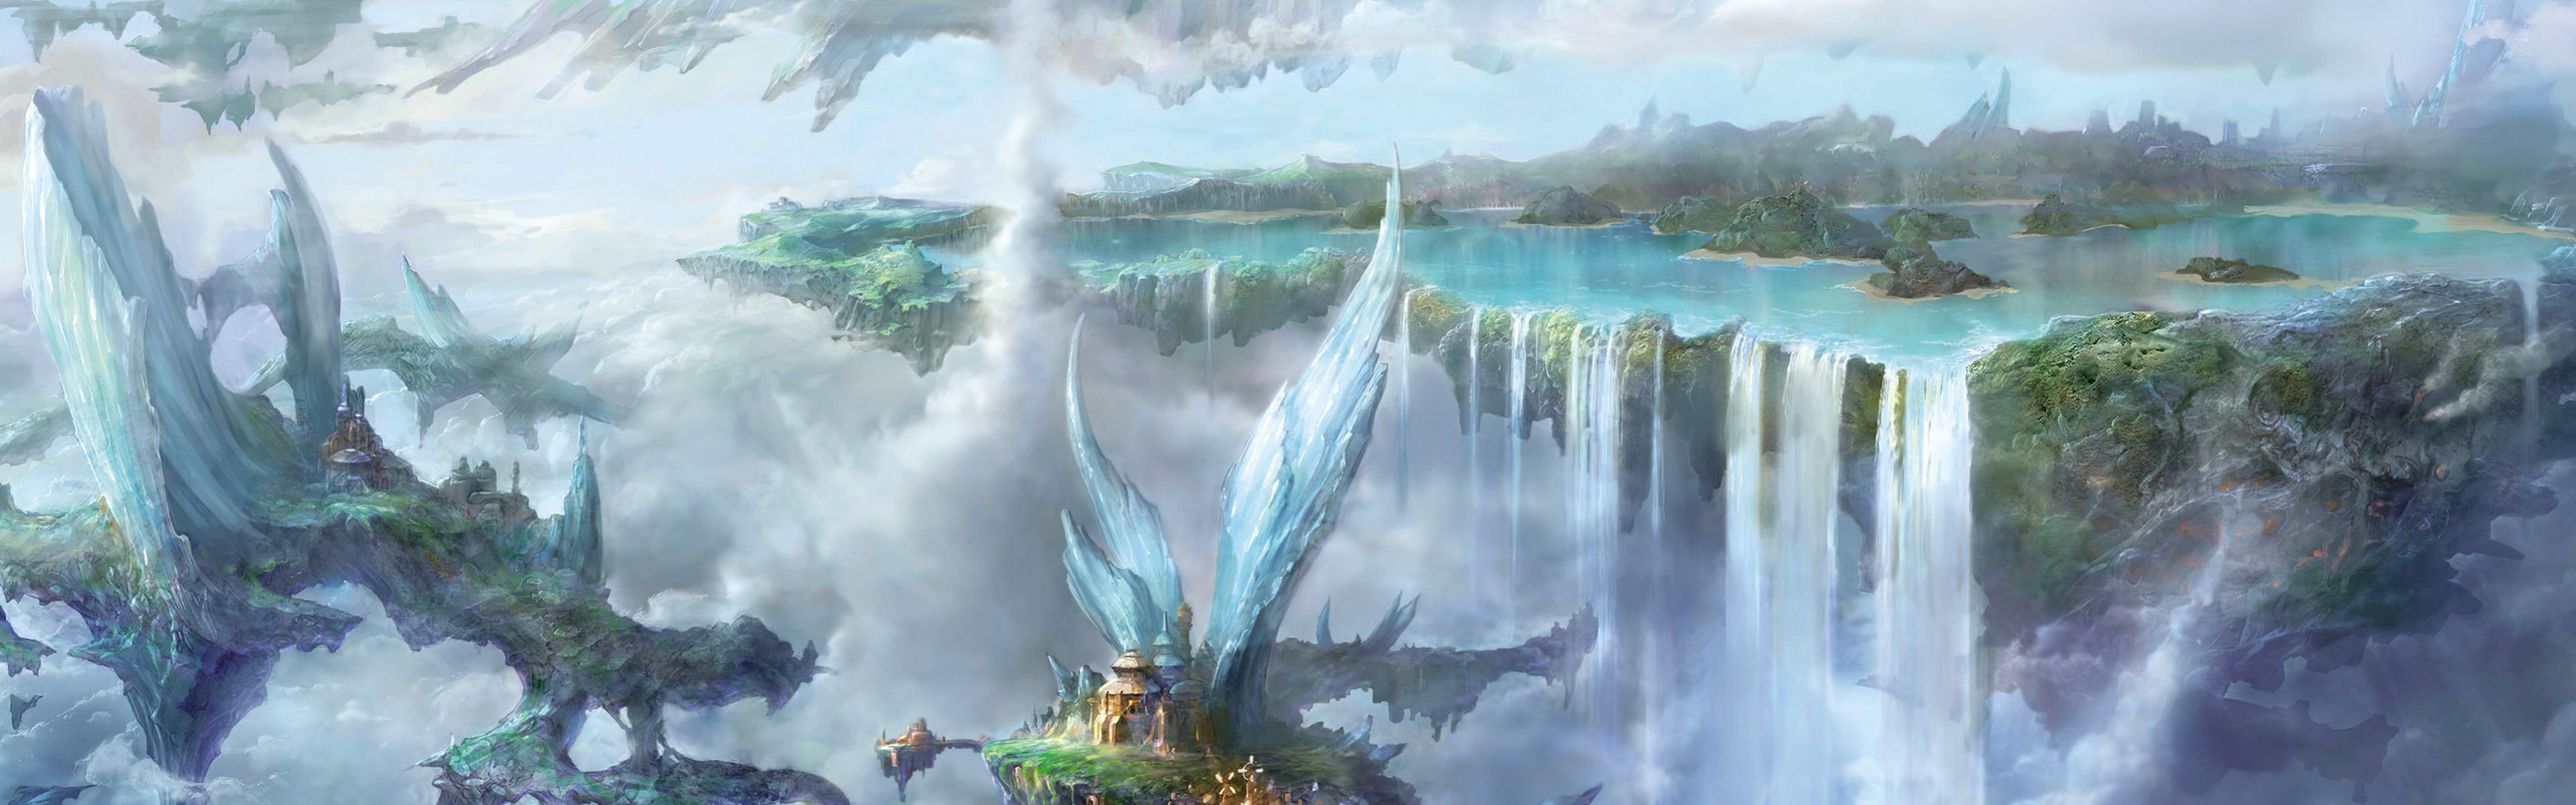 Final Fantasy XII, Fantasy Art Wallpaper, 3840x1200 Dual Screen Desktop